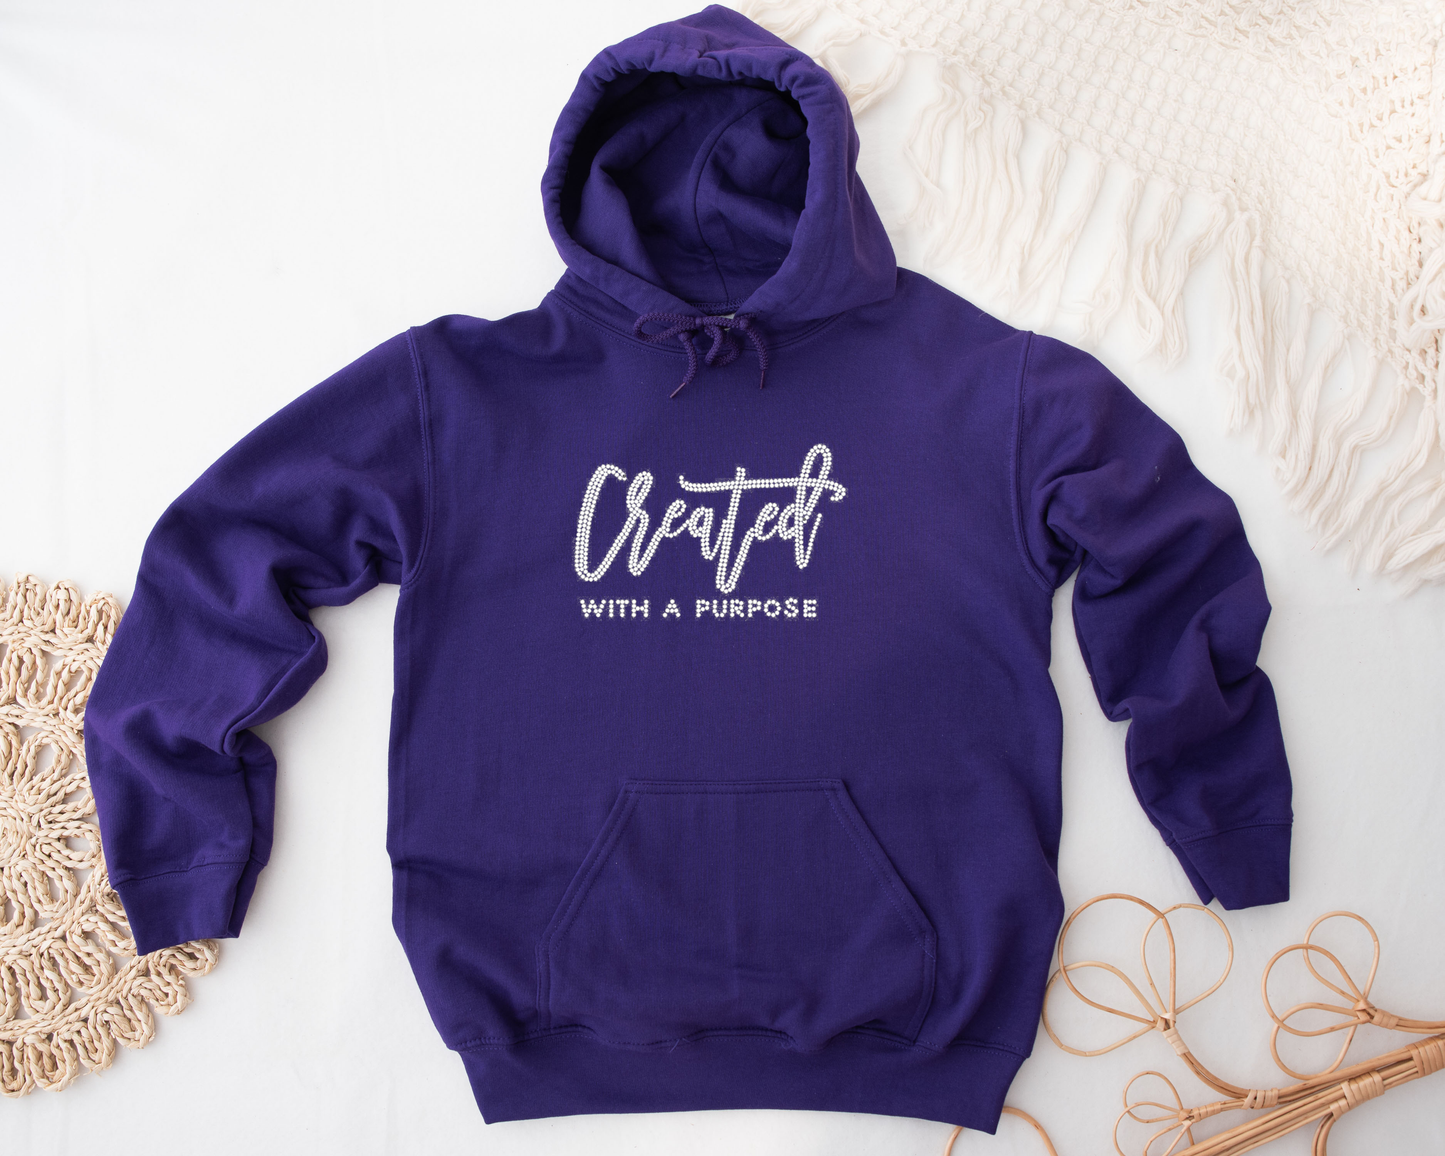 Created with a purpose Rhinestone hoodies/sweatshirts